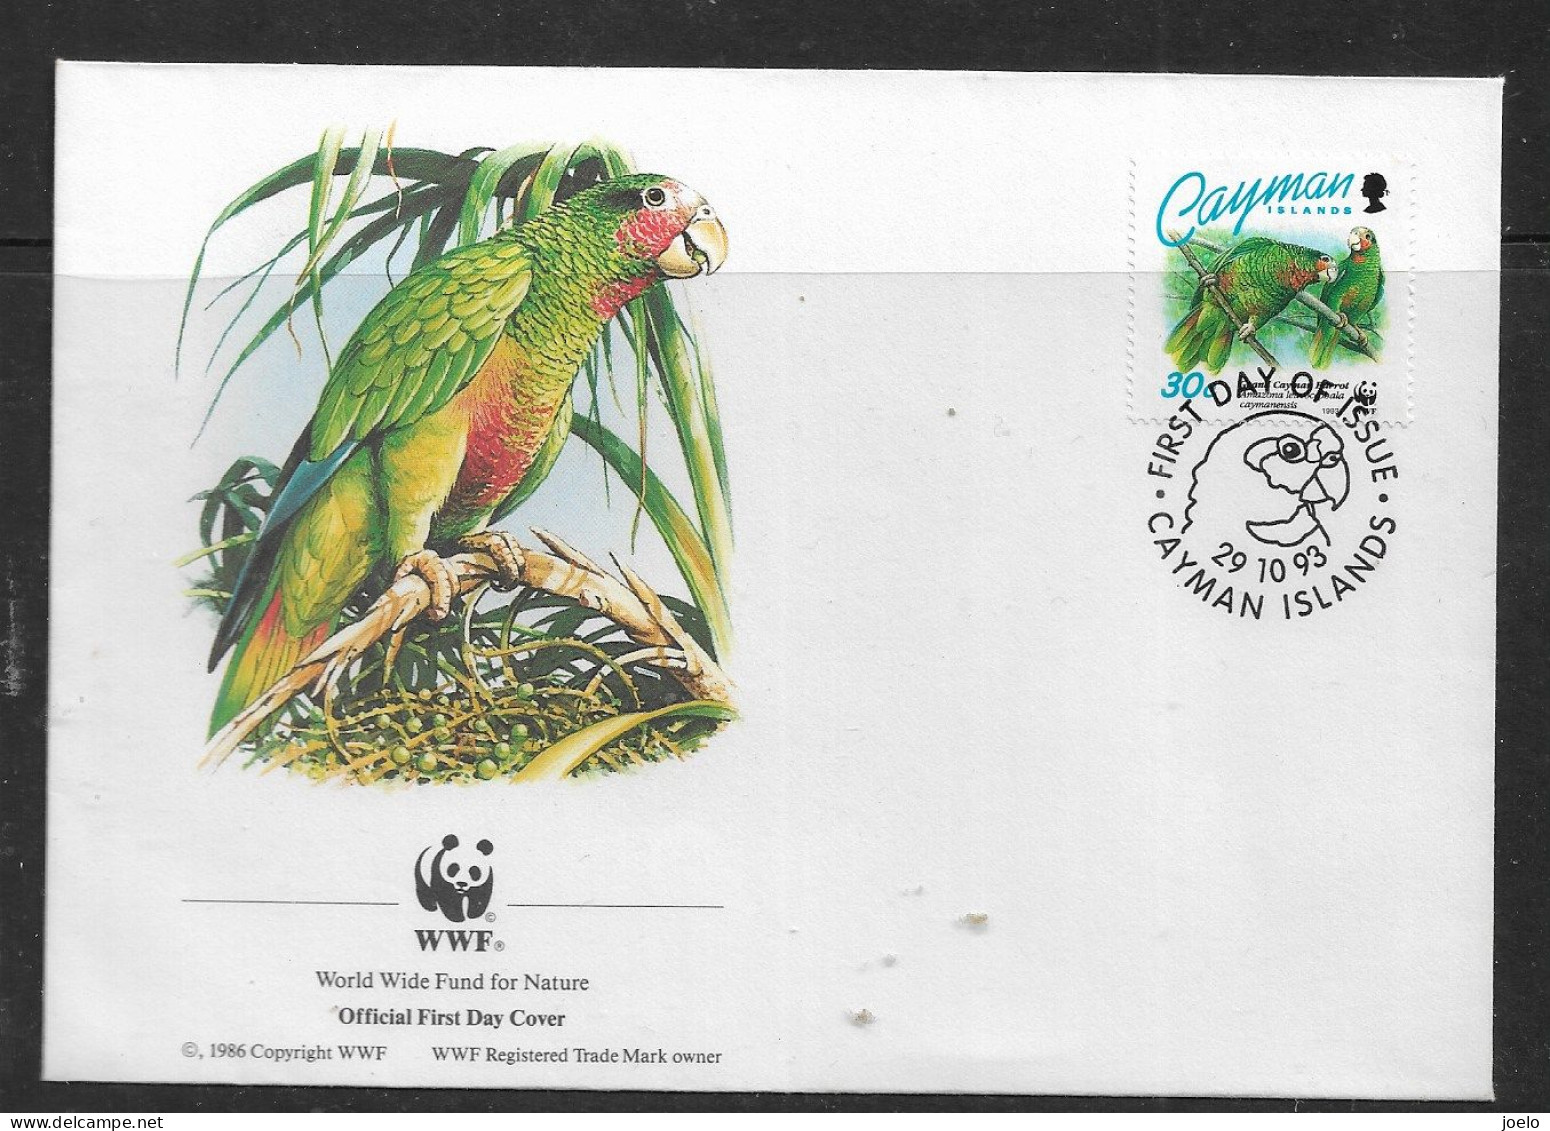 CAYMAN ISLAND 1993 PARROTS WWF FDC - Kaaiman Eilanden